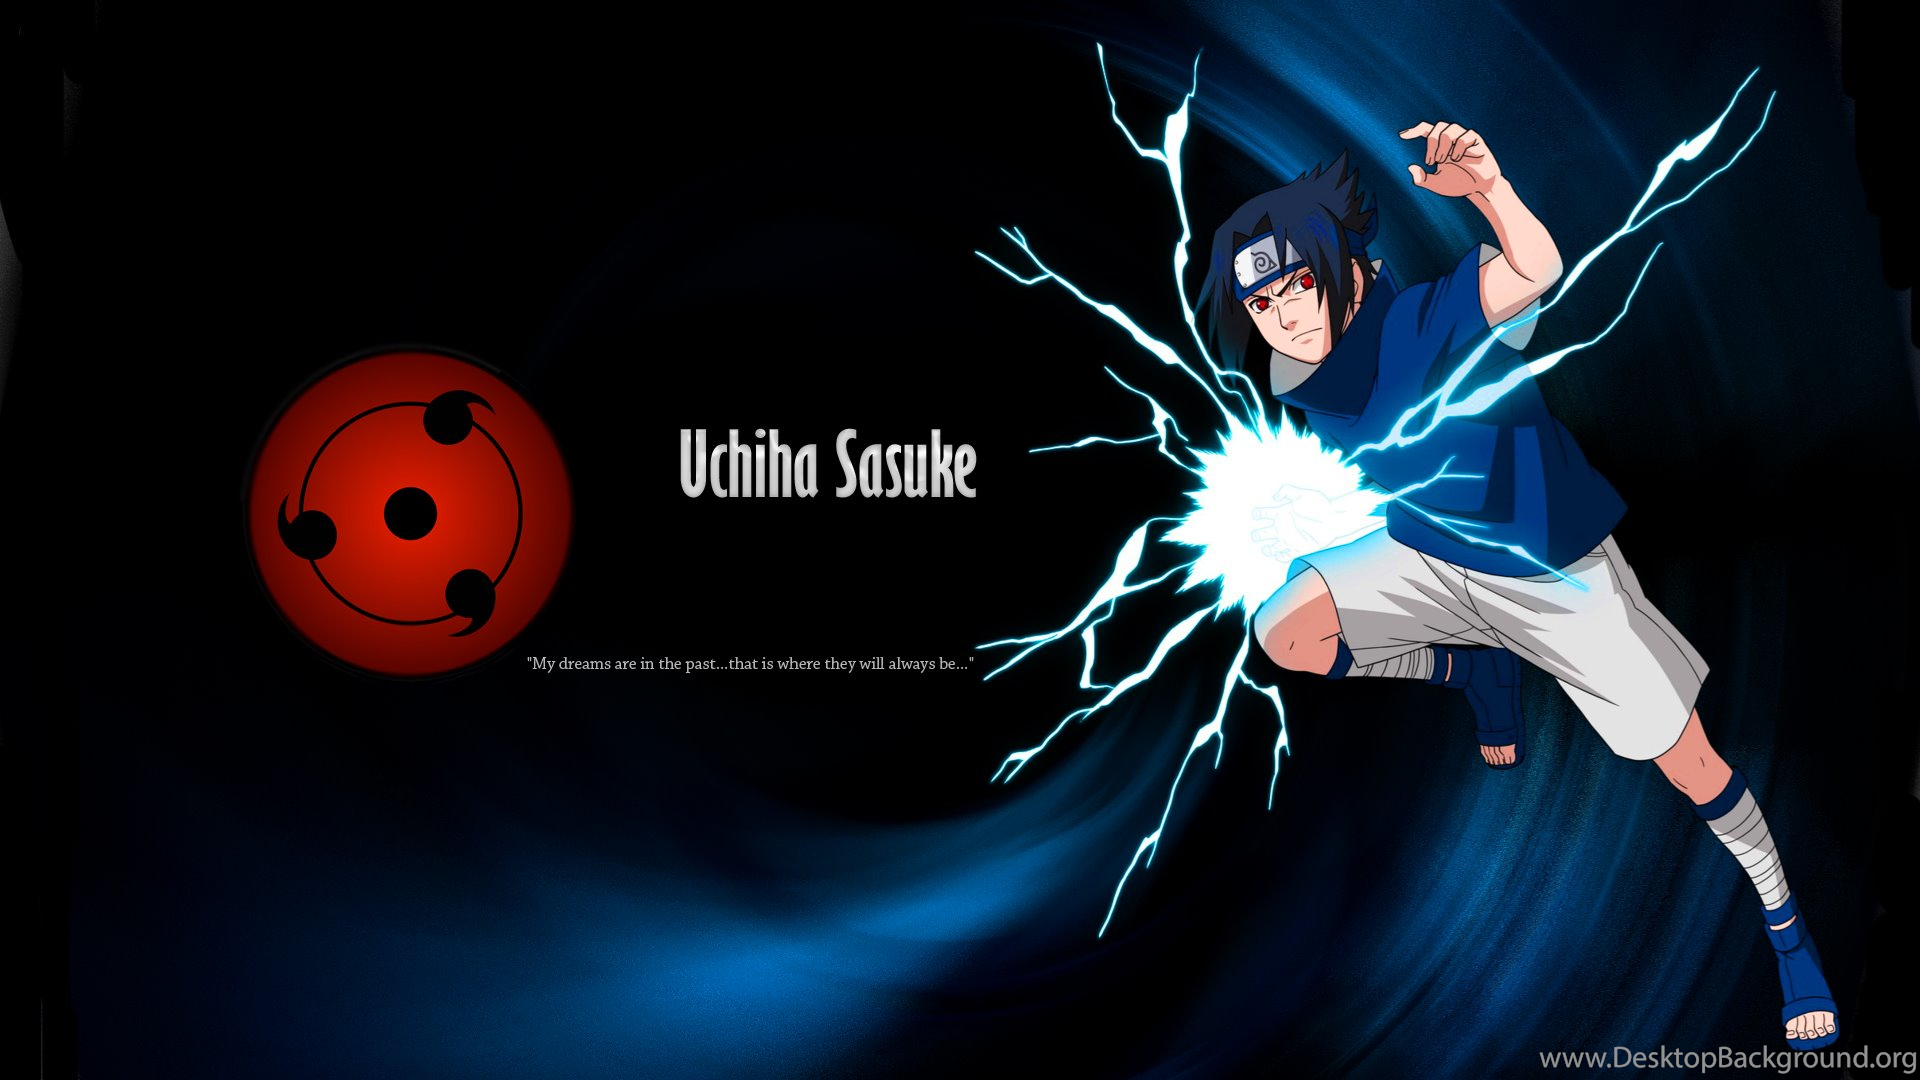 Ps3 Anime Wallpaper For iPhone Desktop Background